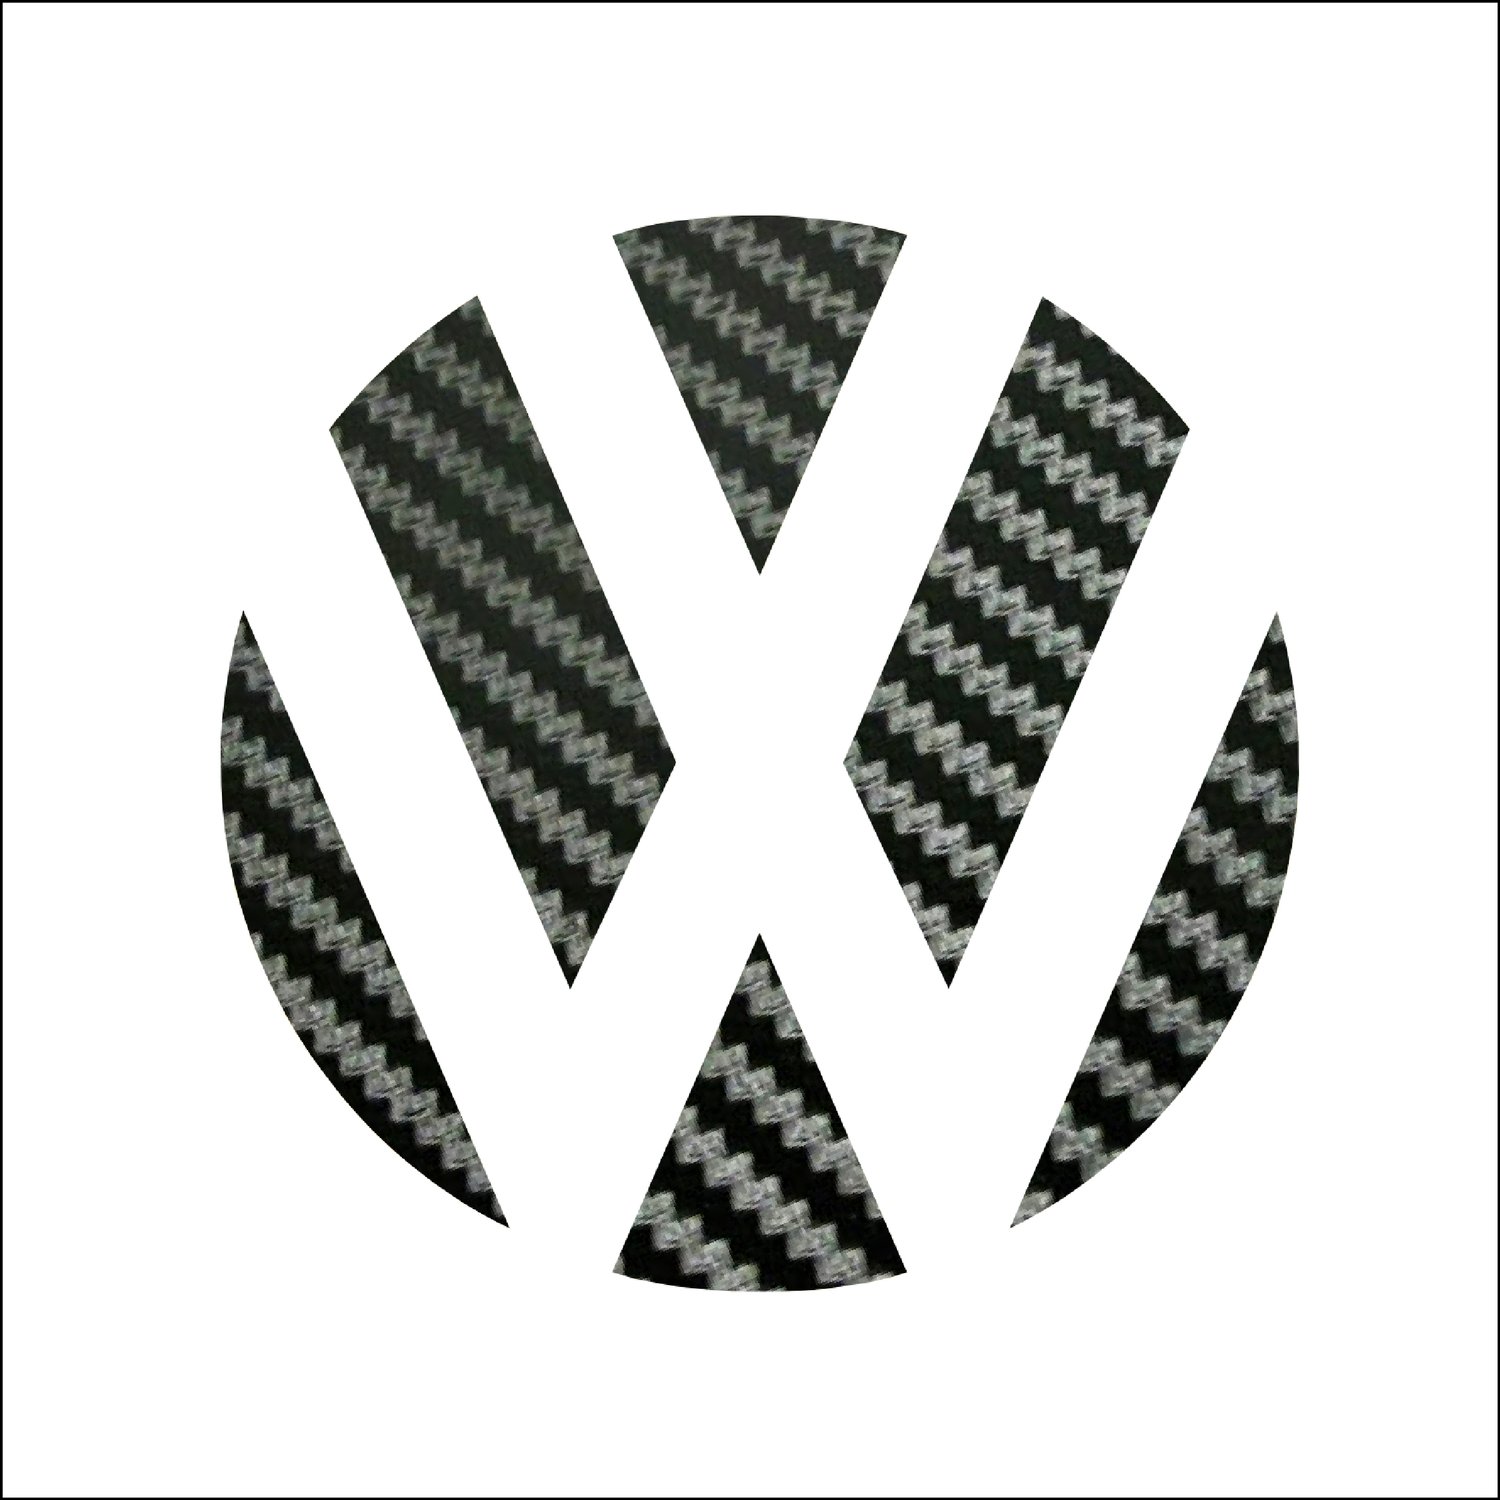 Image of Rear Badge Vinyl -Sticker bomb-German Flag-Carbon Fiber-White fits: Volkswagen Passat (2013+)